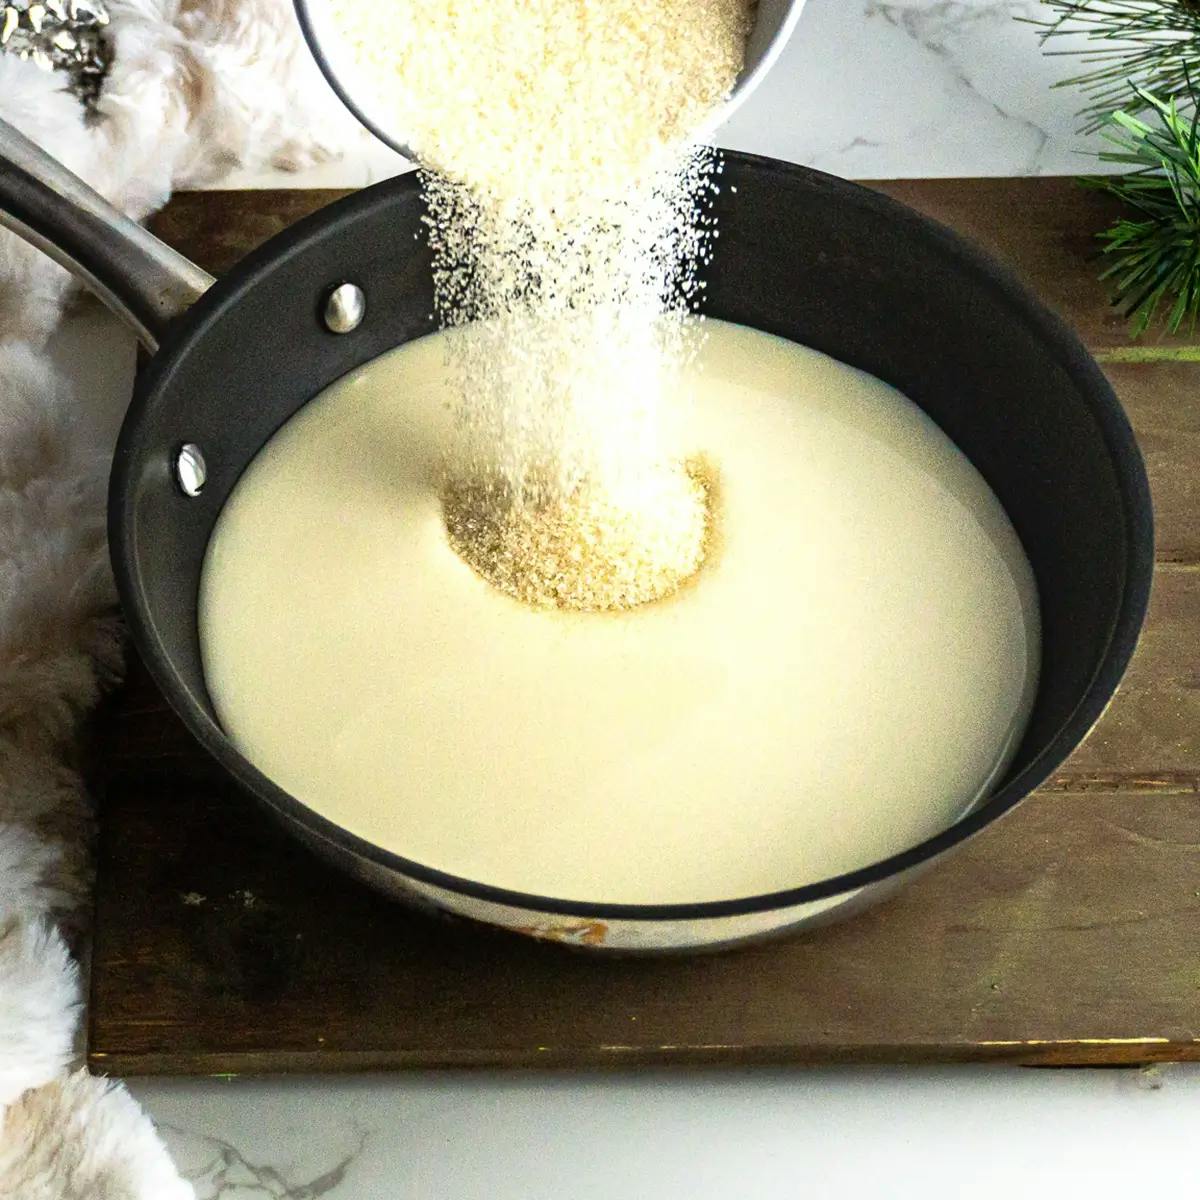 Heating milk and sugar in a recipe for vegan vanilla pudding.